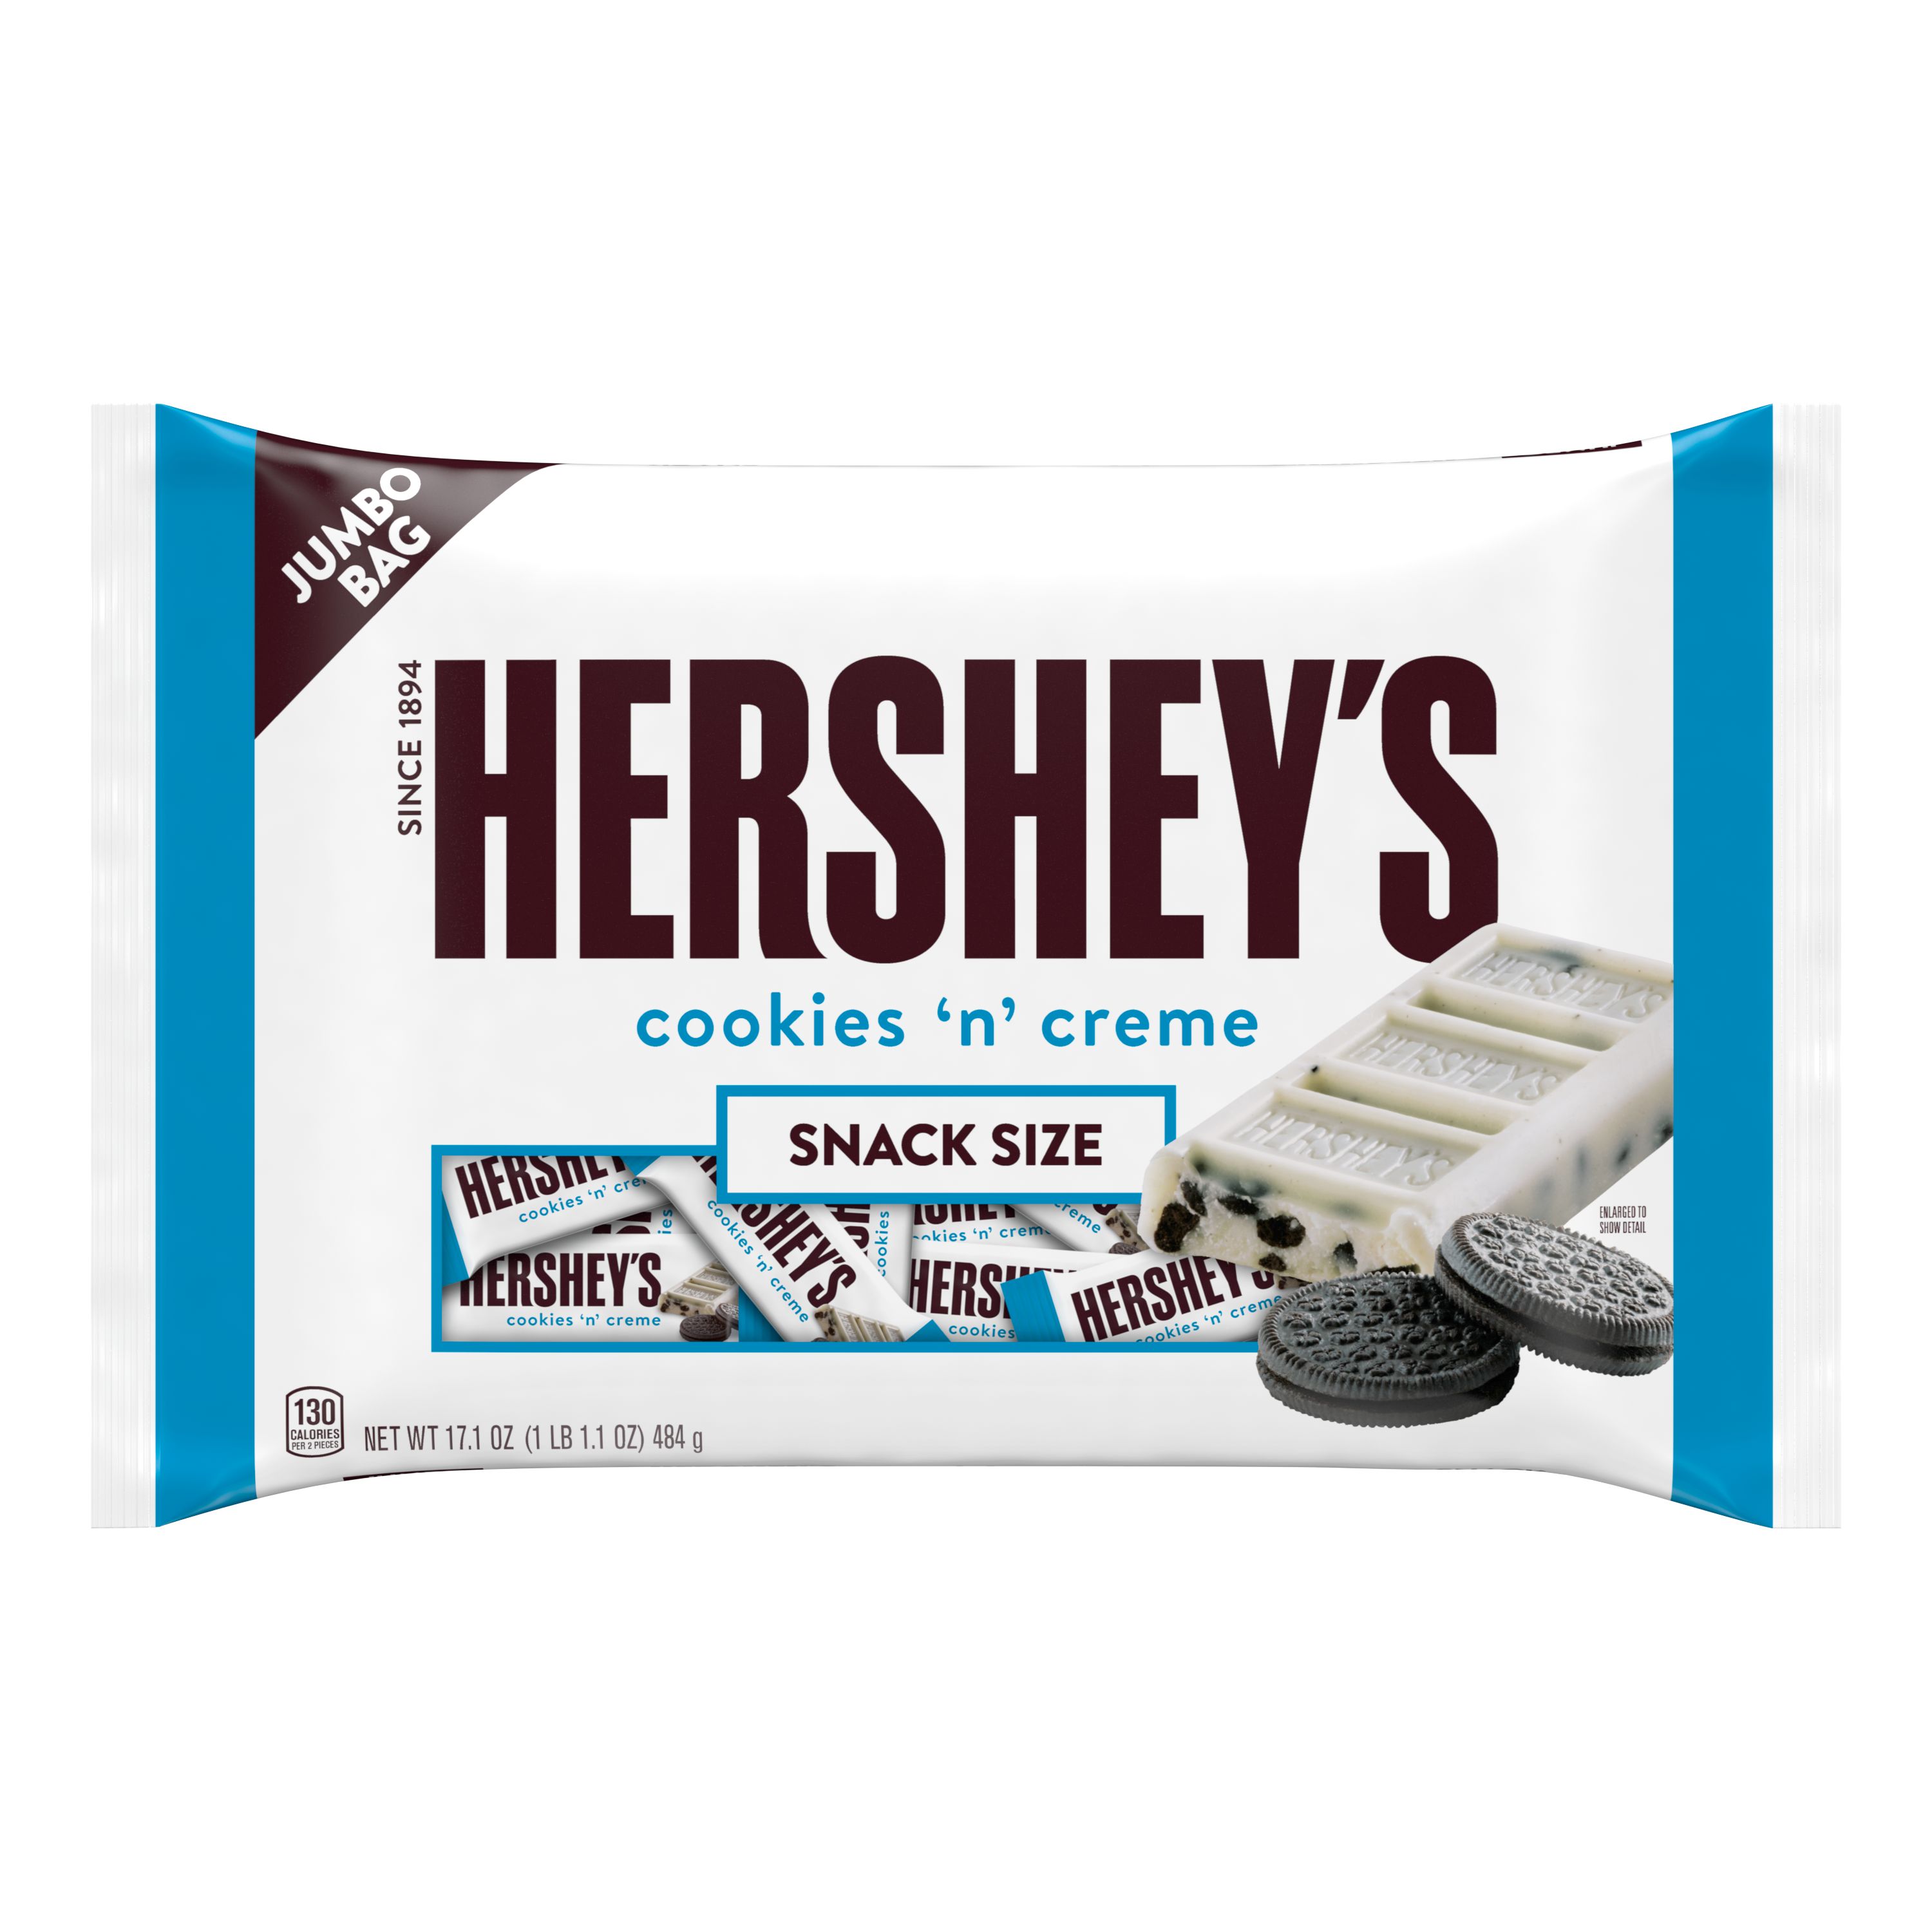 HERSHEY'S Cookies 'n' Creme Snack Size Candy Bars, 17.1 oz, Jumbo Bag $6.54 + Free S&H w/ Walmart+ or $35+